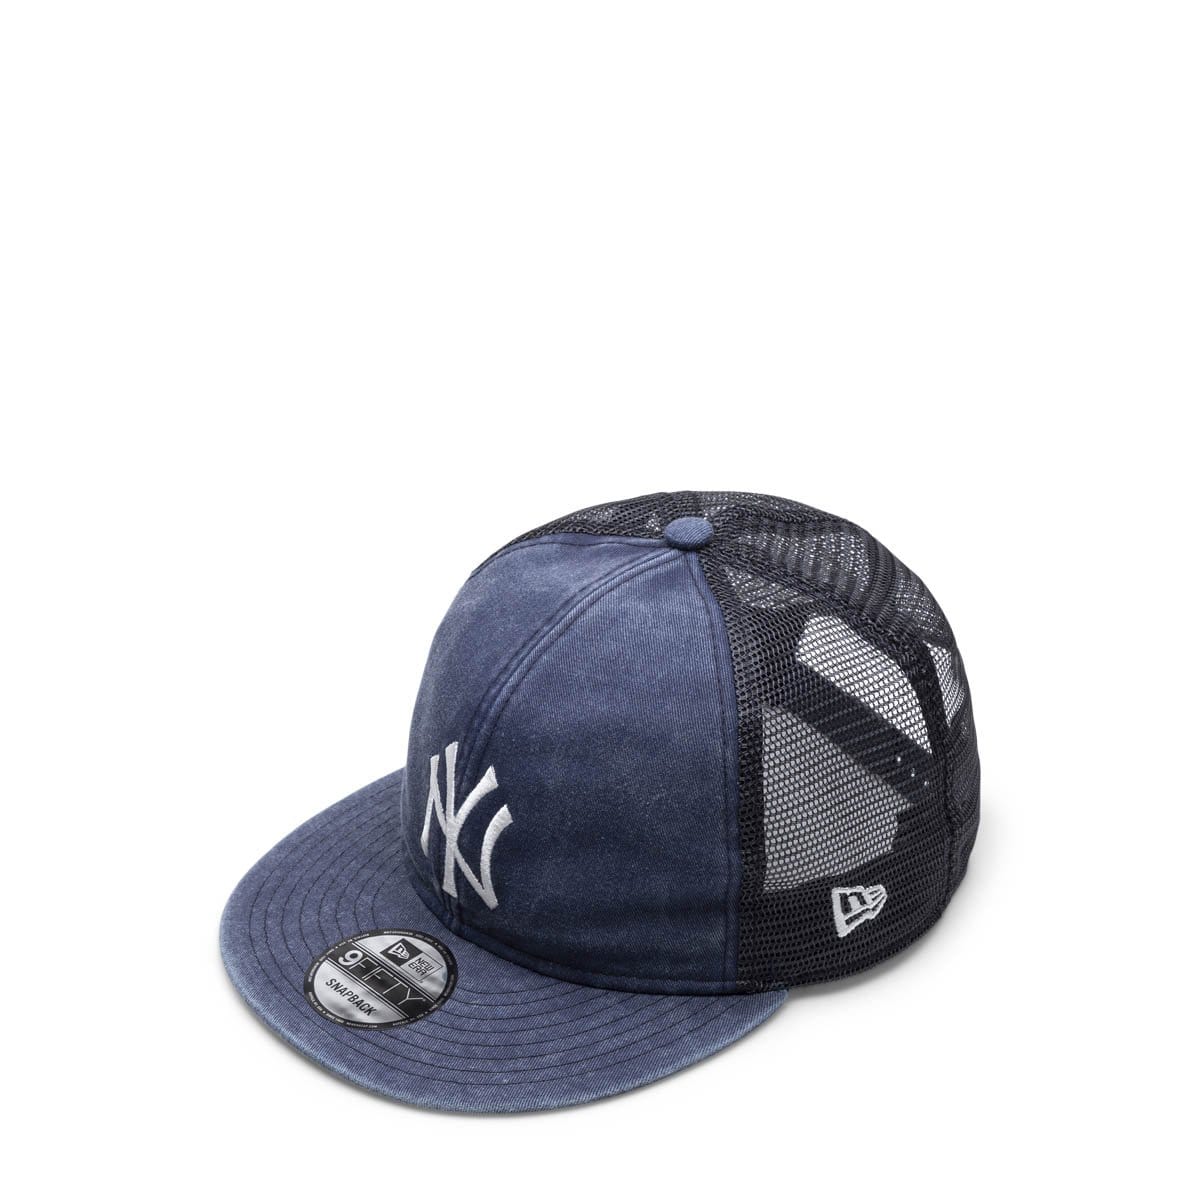 Eric Emanuel EE New YORK CITY Hats Fashion Unisex Casual Caps